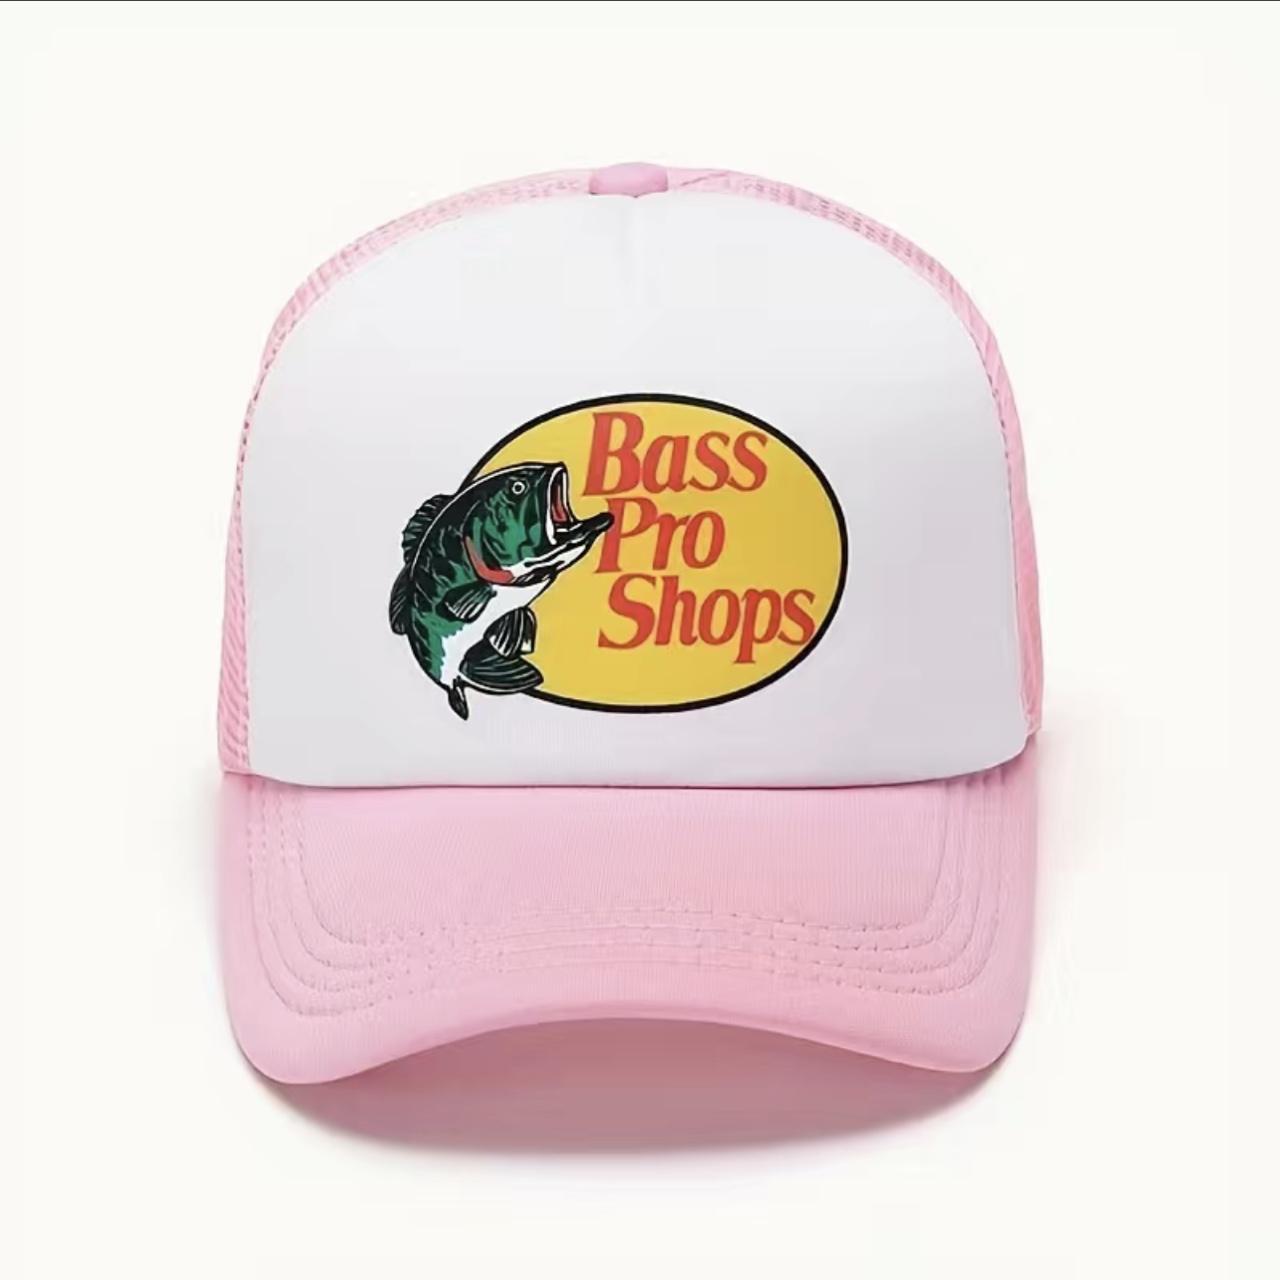 Bass Pro Shop hat [Pink][White] Outdoor, Truckers... - Depop